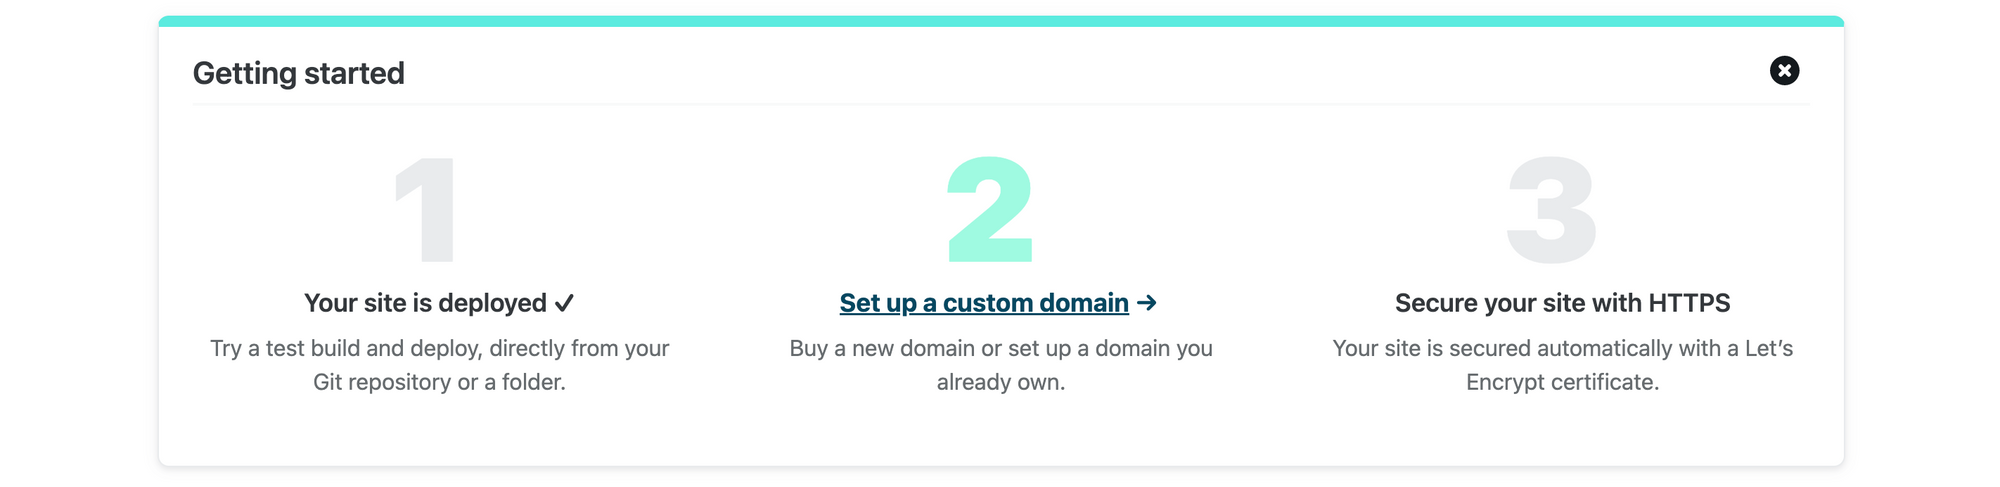 Setting up a custom domain